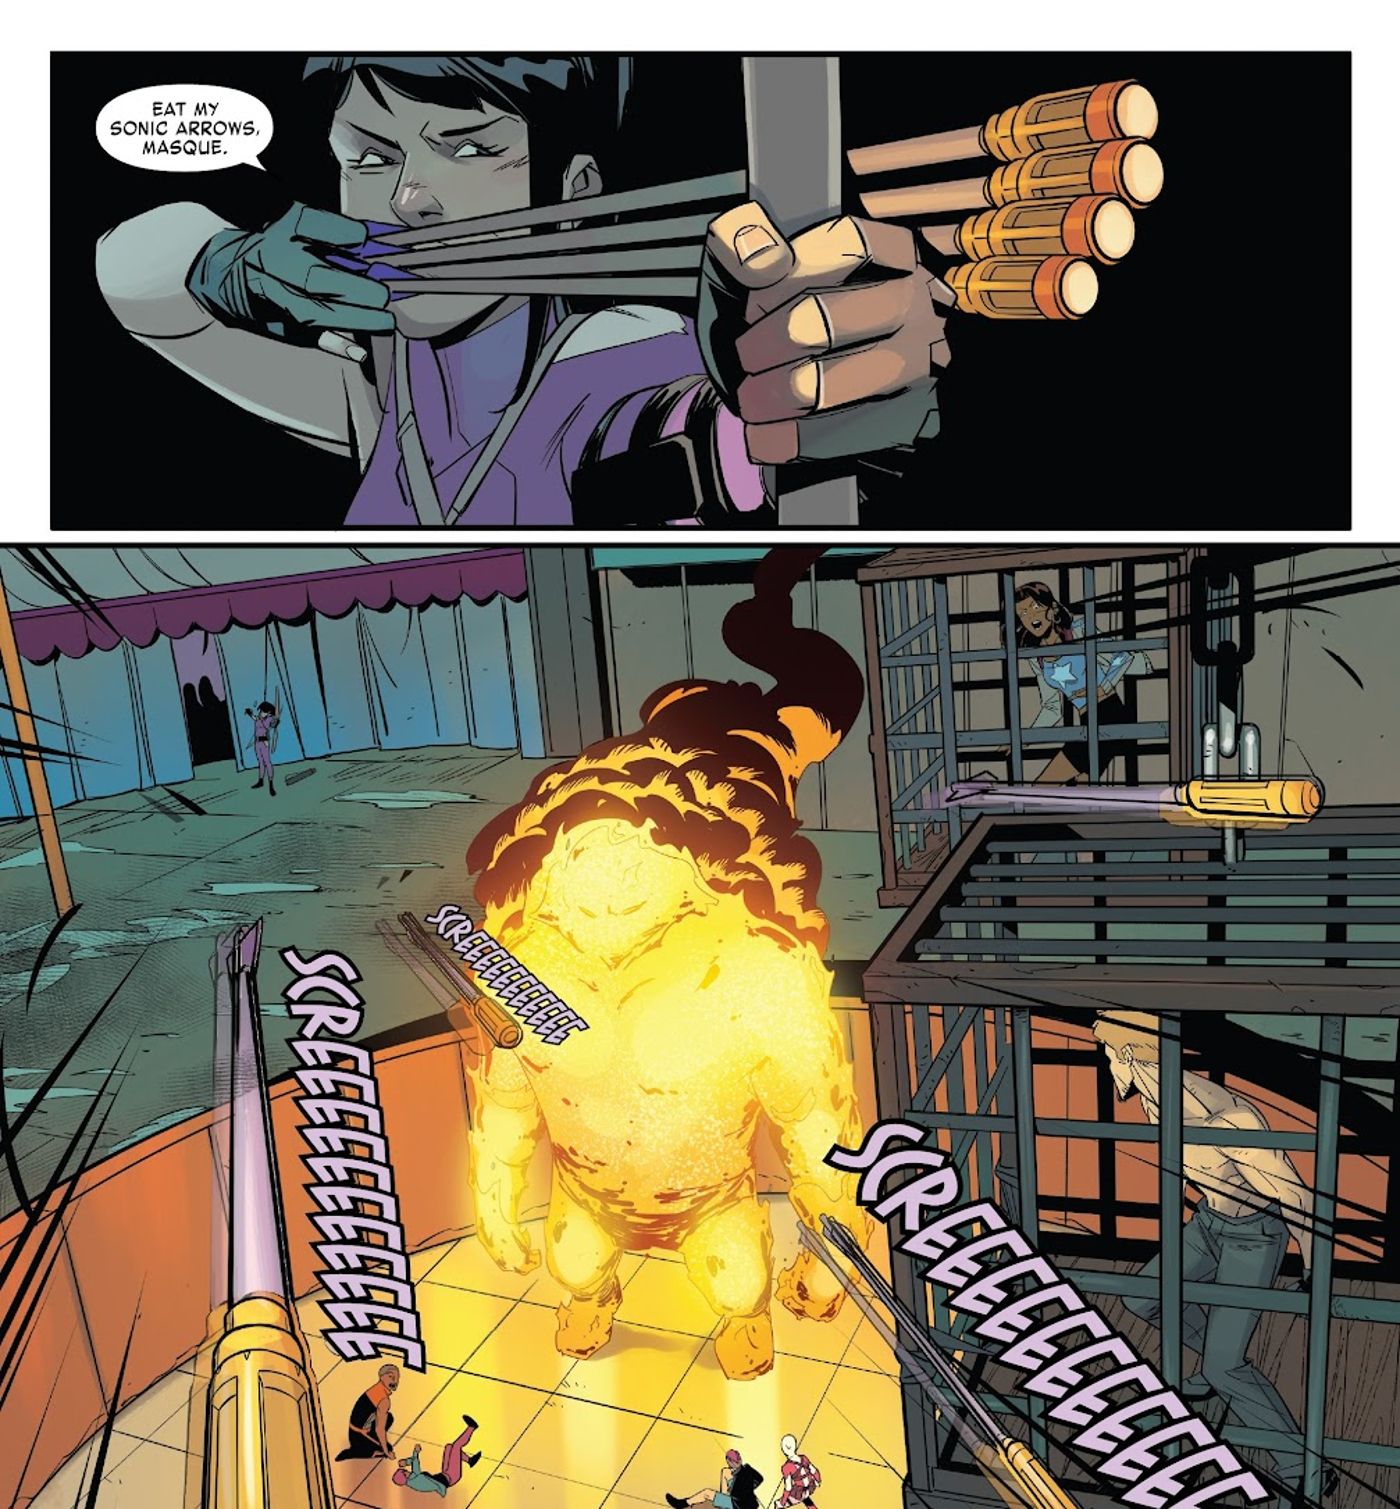 Hawkeye fires trick arrows. 